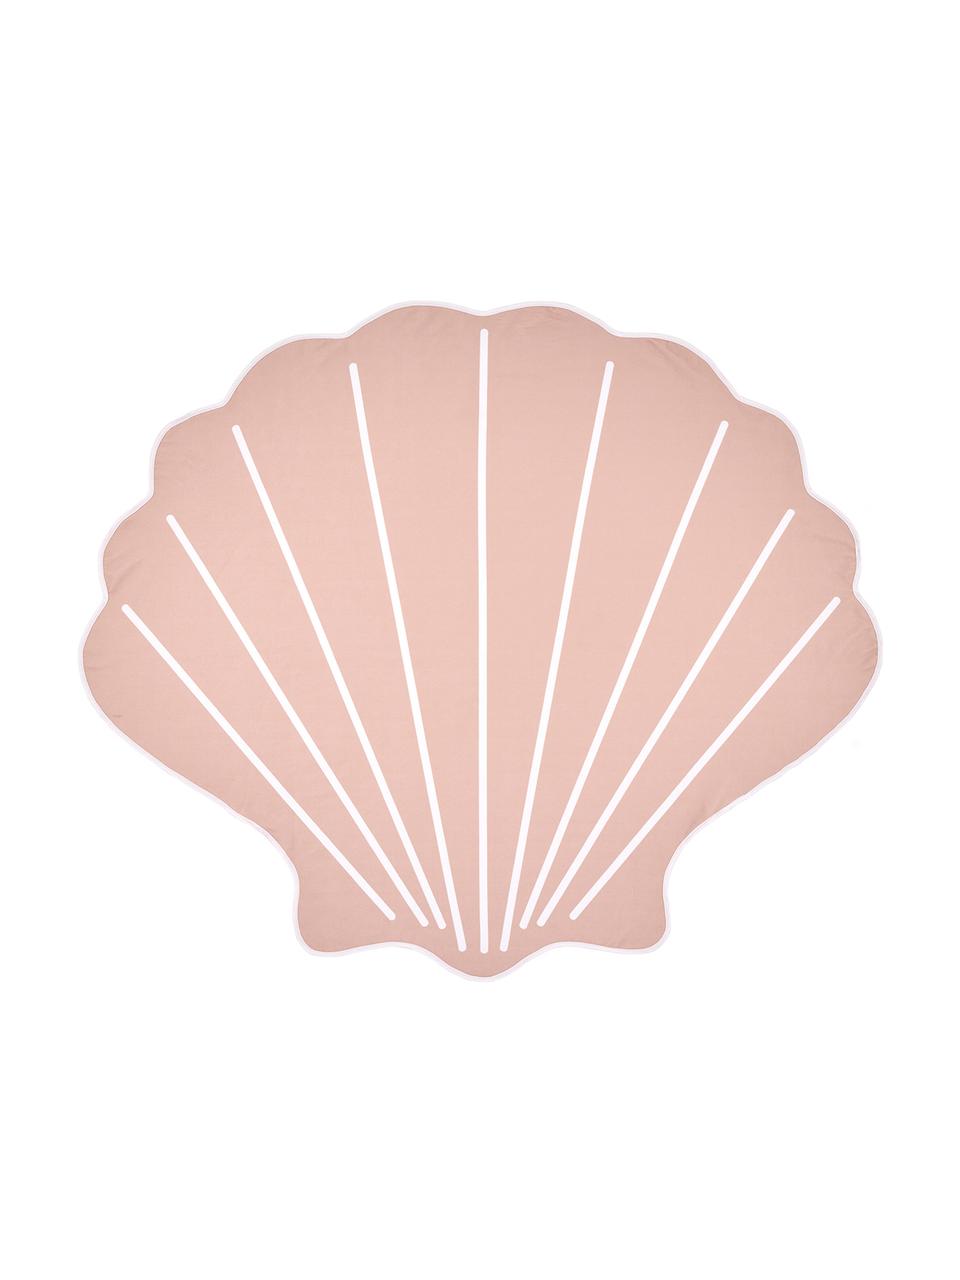 Strandlaken Shelly, 55% polyester, 45% katoen
Zeer lichte kwaliteit 340 g/m², Roze, wit, 150 x 150 cm